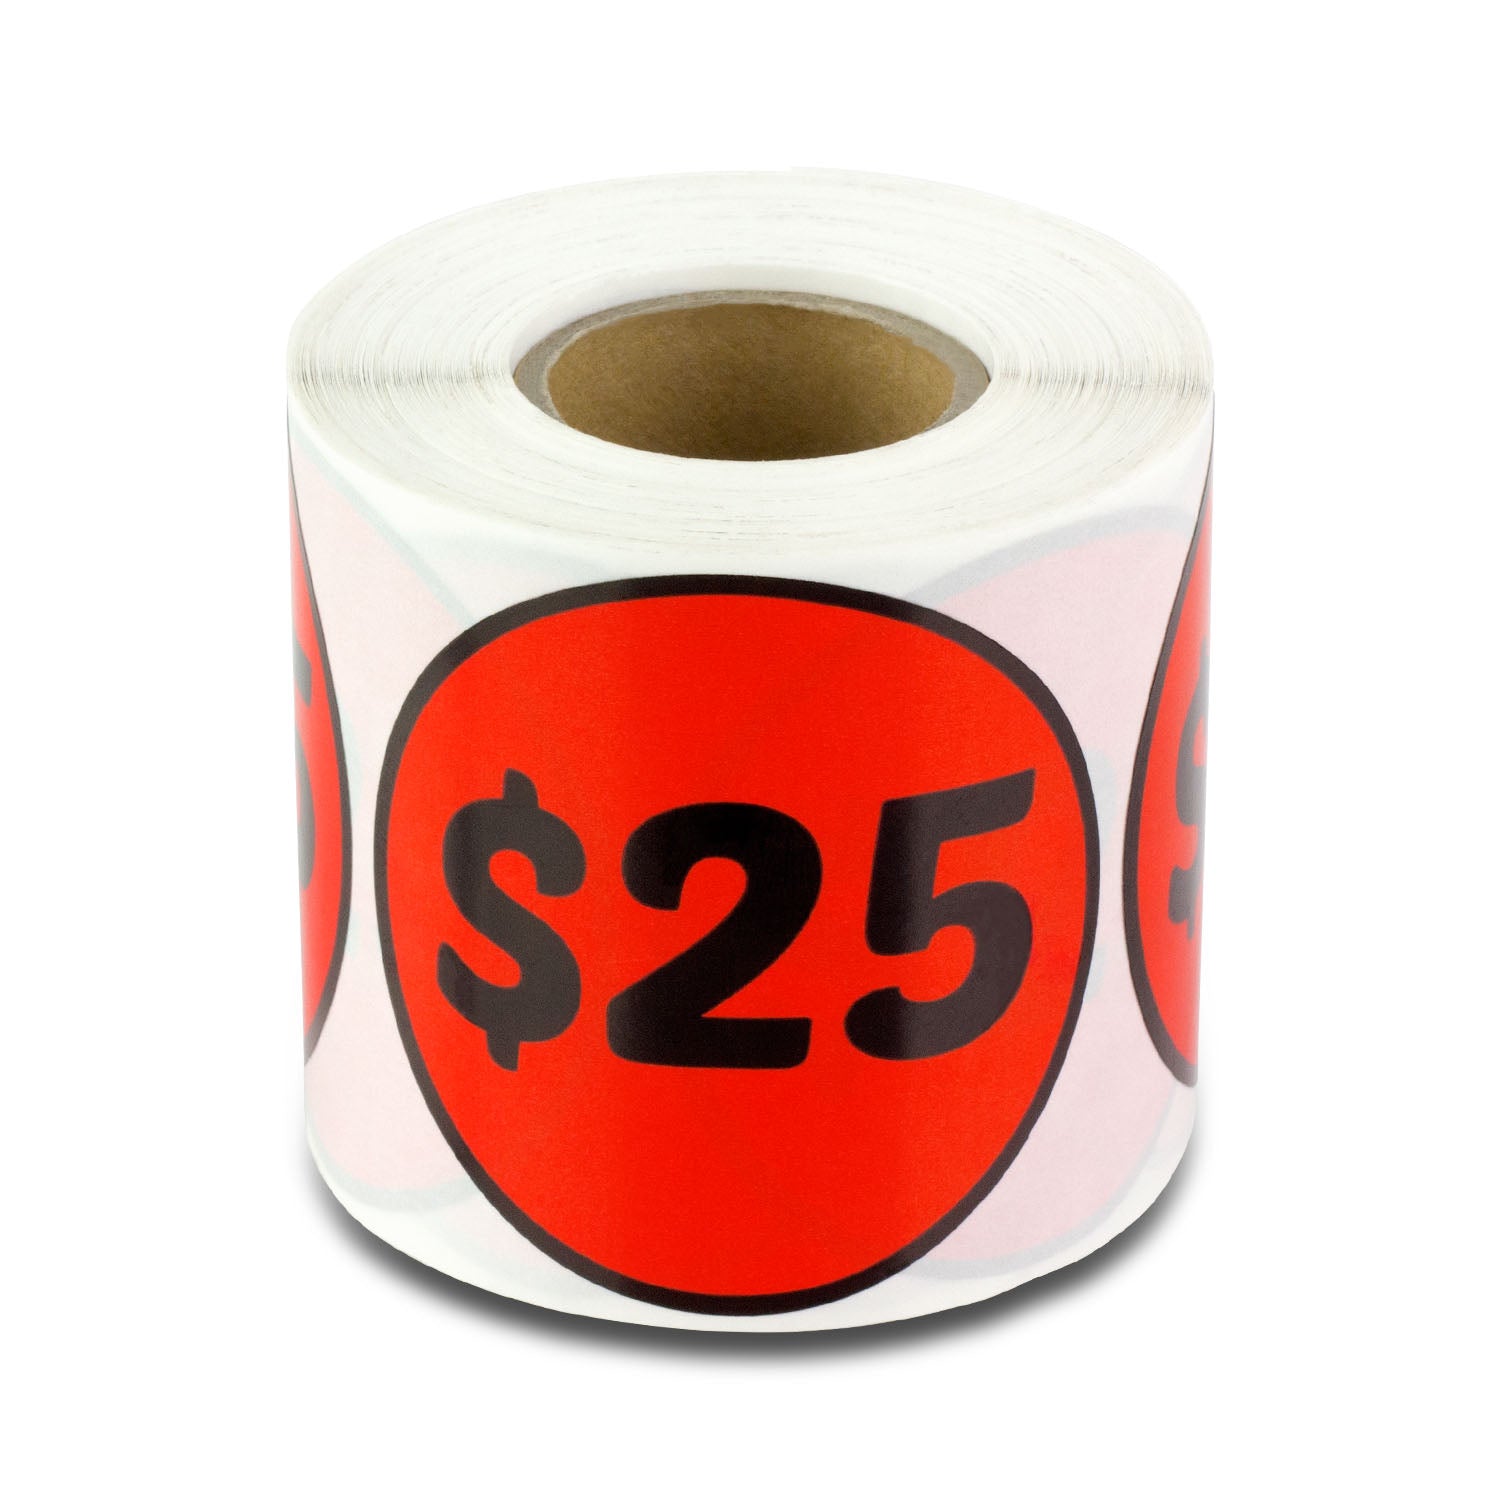 2 inch  Retail & Sales: 25 Dollar Stickers / $25 Dollar Price